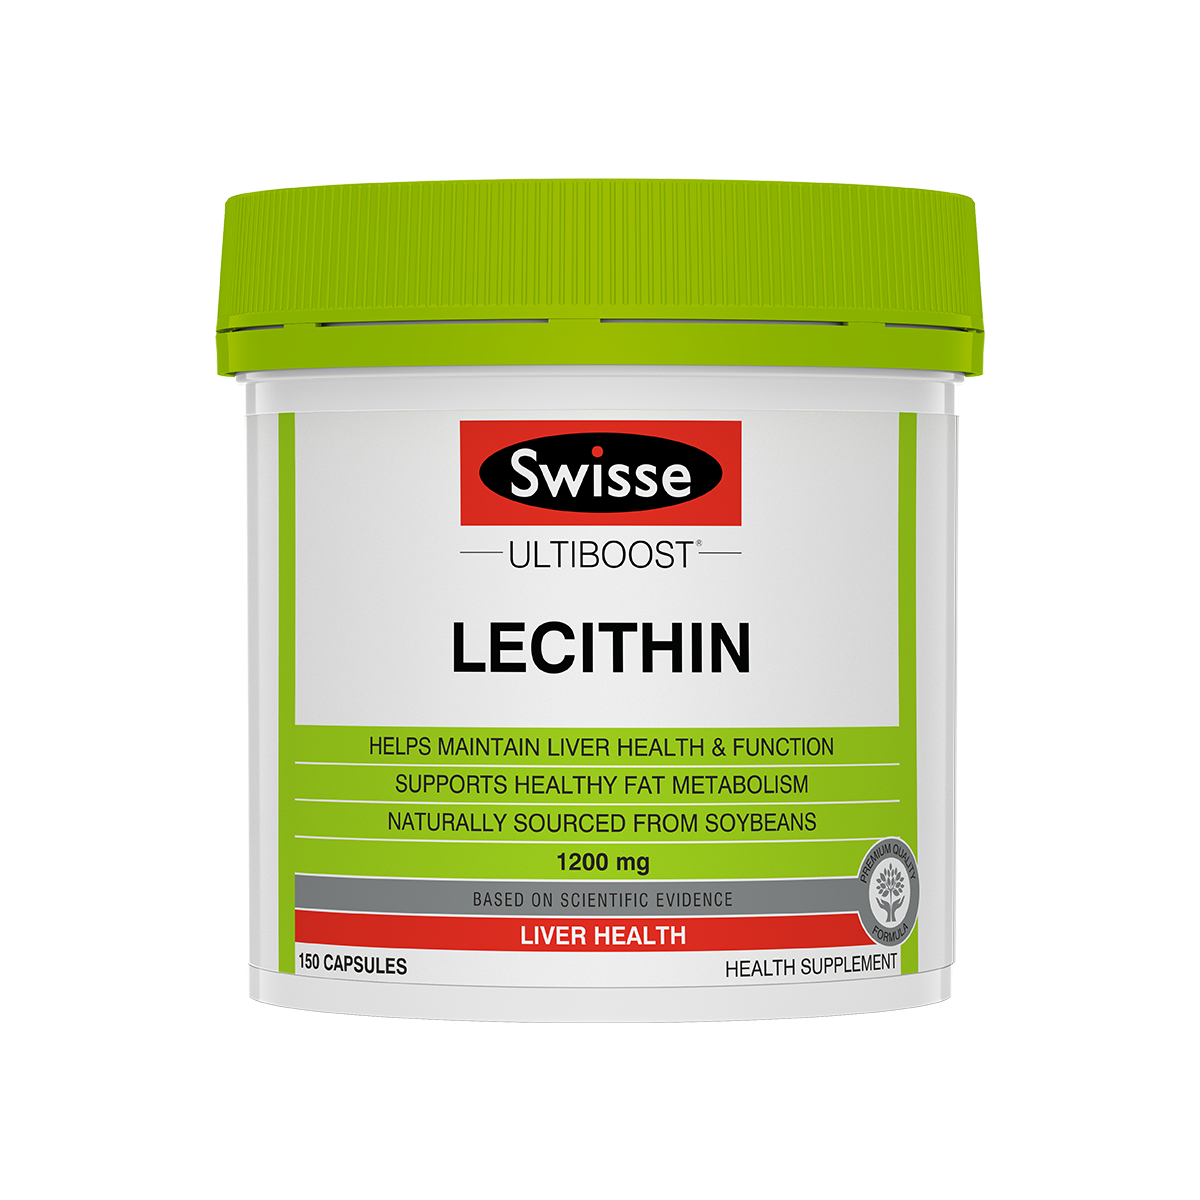 SWISSE ULTIBOOST LECITHIN 1200mg CAPSULE 150's